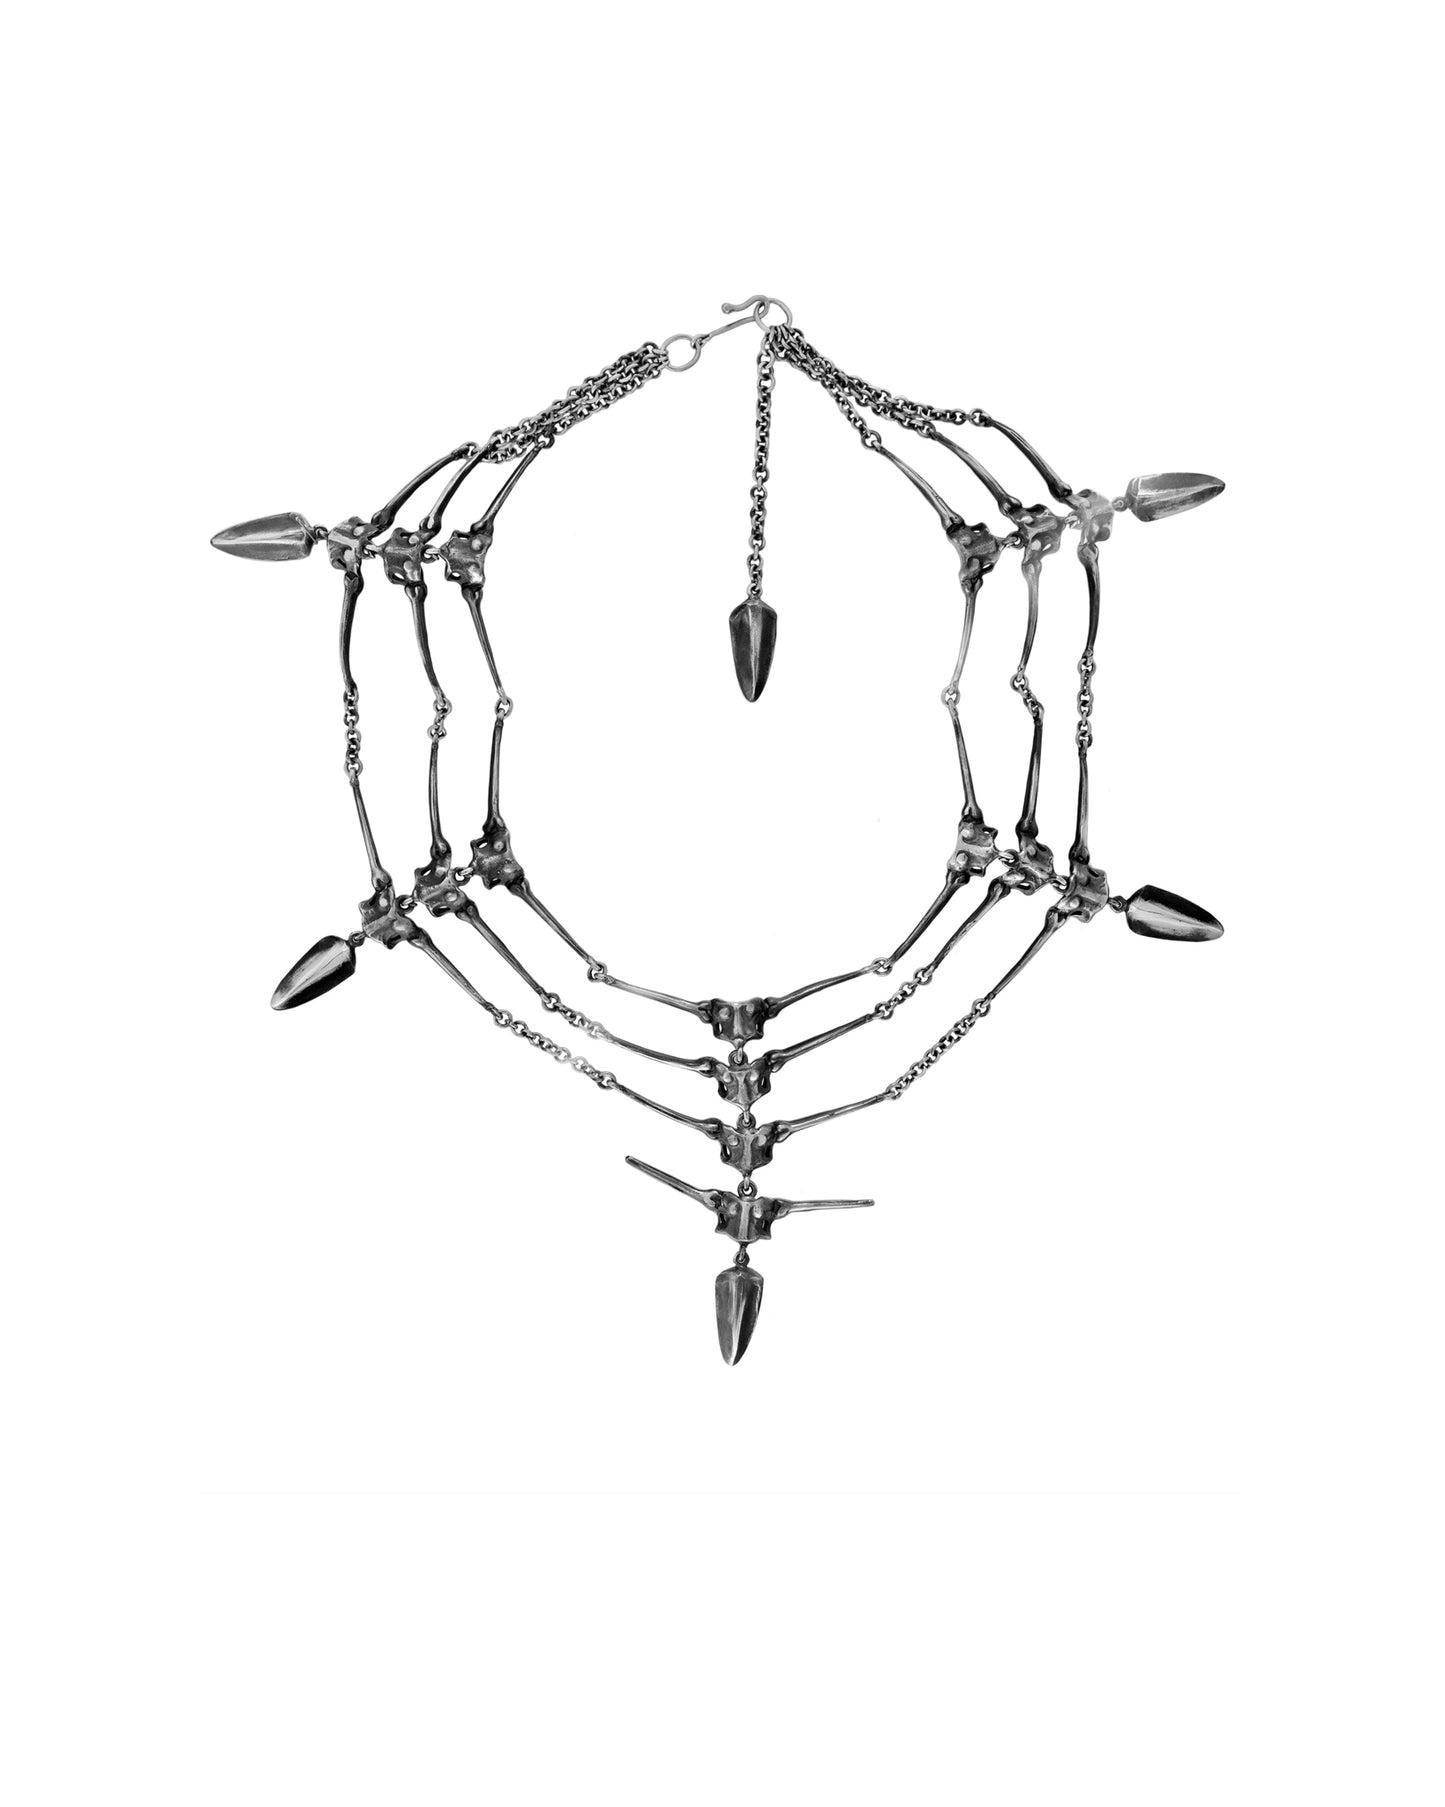 Centipede Web Necklace